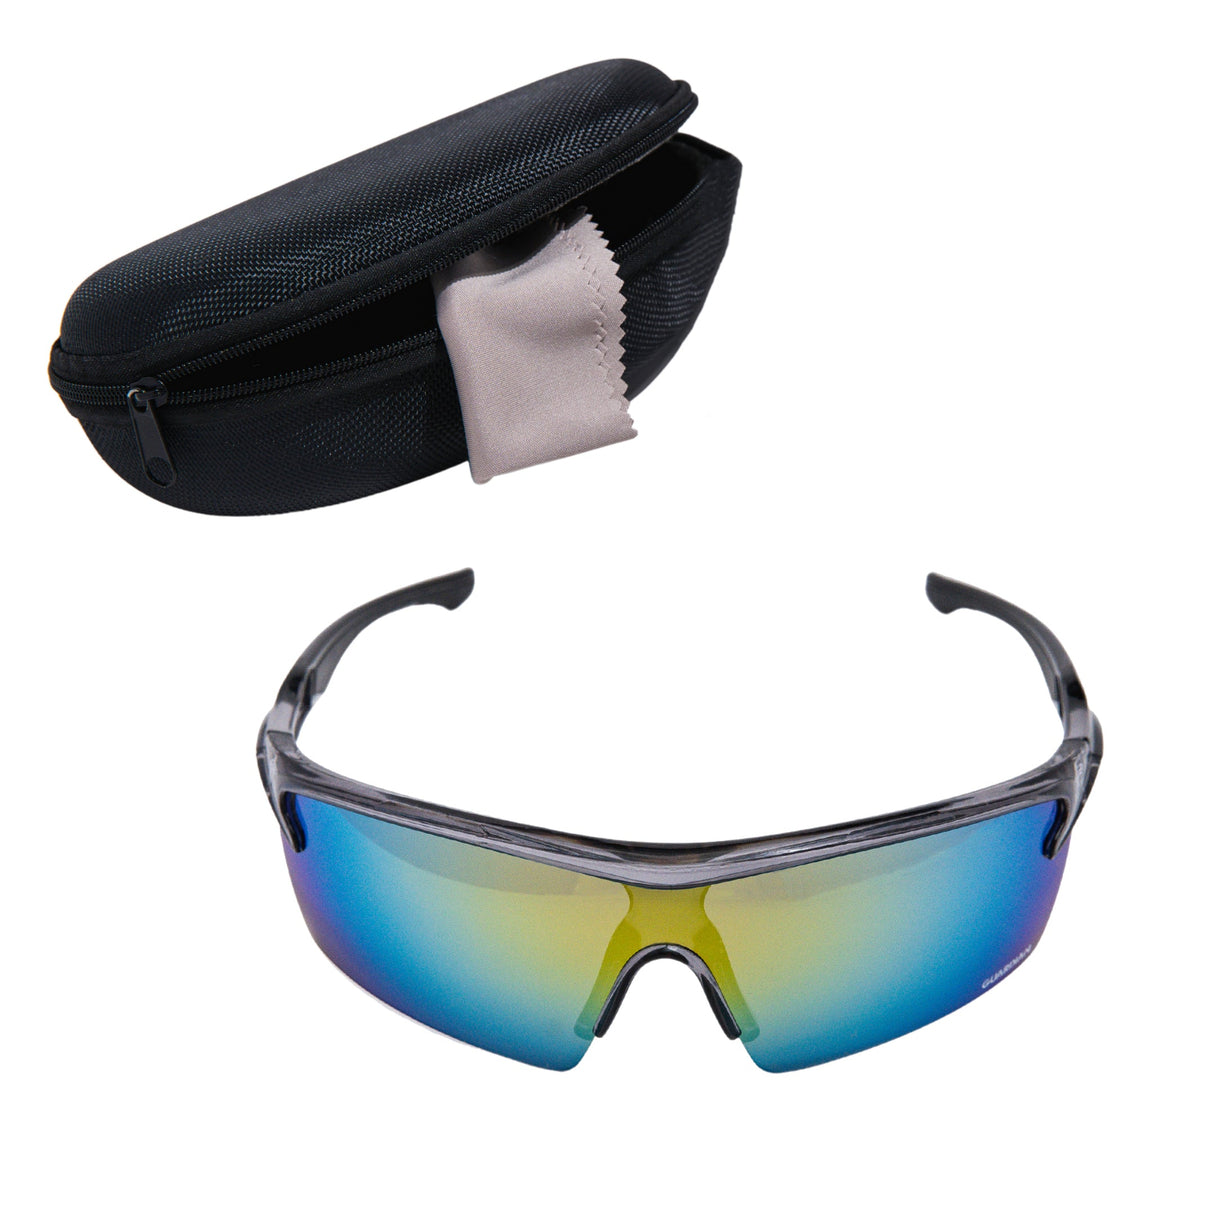 Guardian Baseball Reflector Pro Baseball Sunglasses for Men - Sports Sunglasses - Protective Case with Lens Cloth -Adult Shield Lens, Men's, Gray